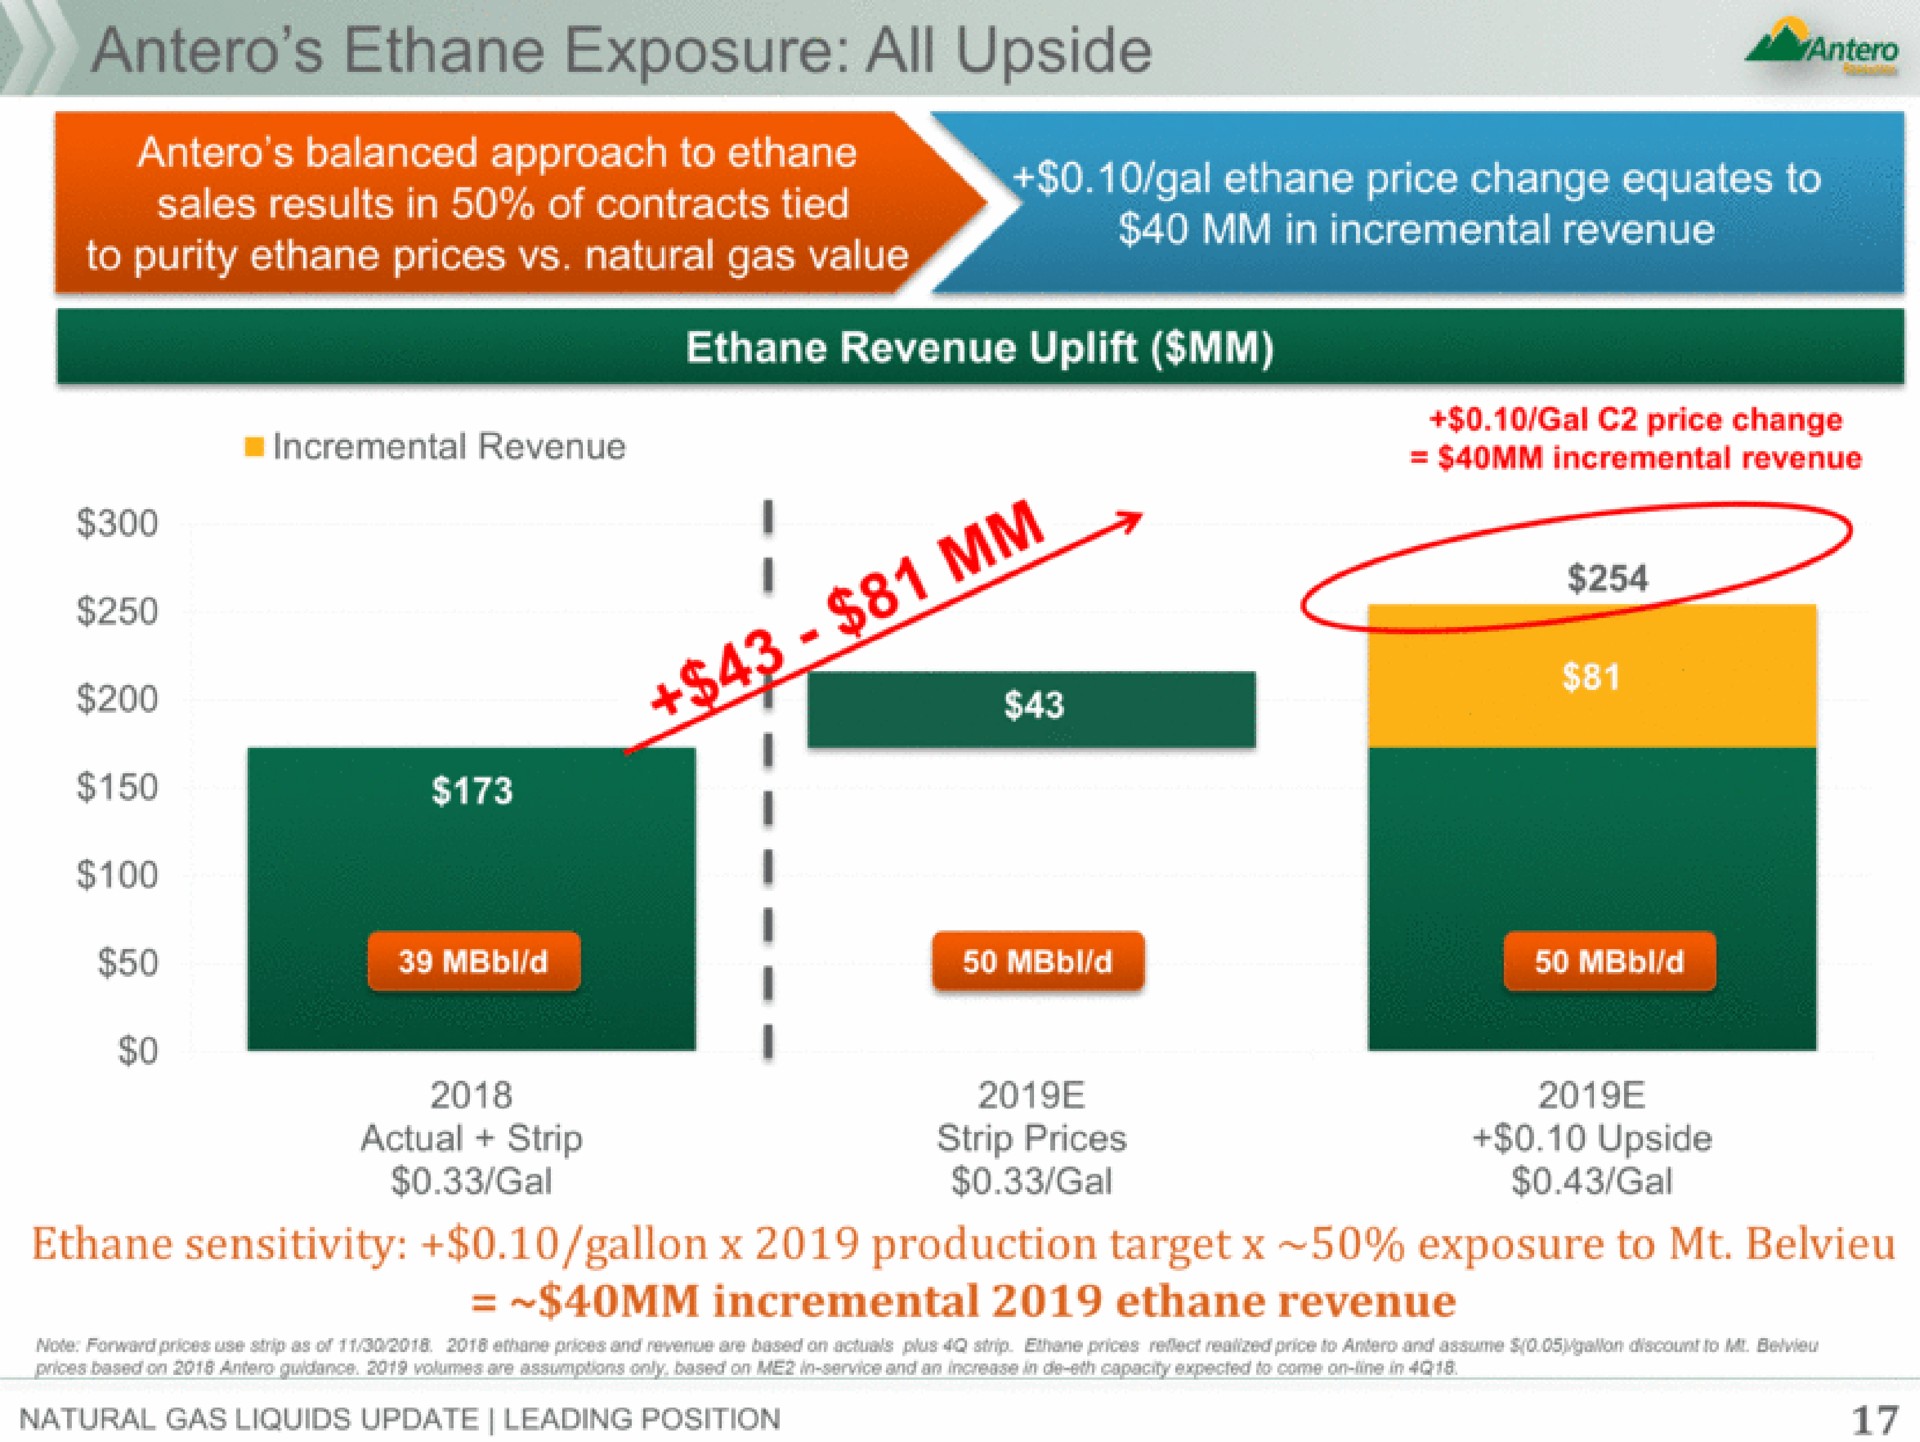 ethane exposure all upside in incremental revenue i | Antero Midstream Partners